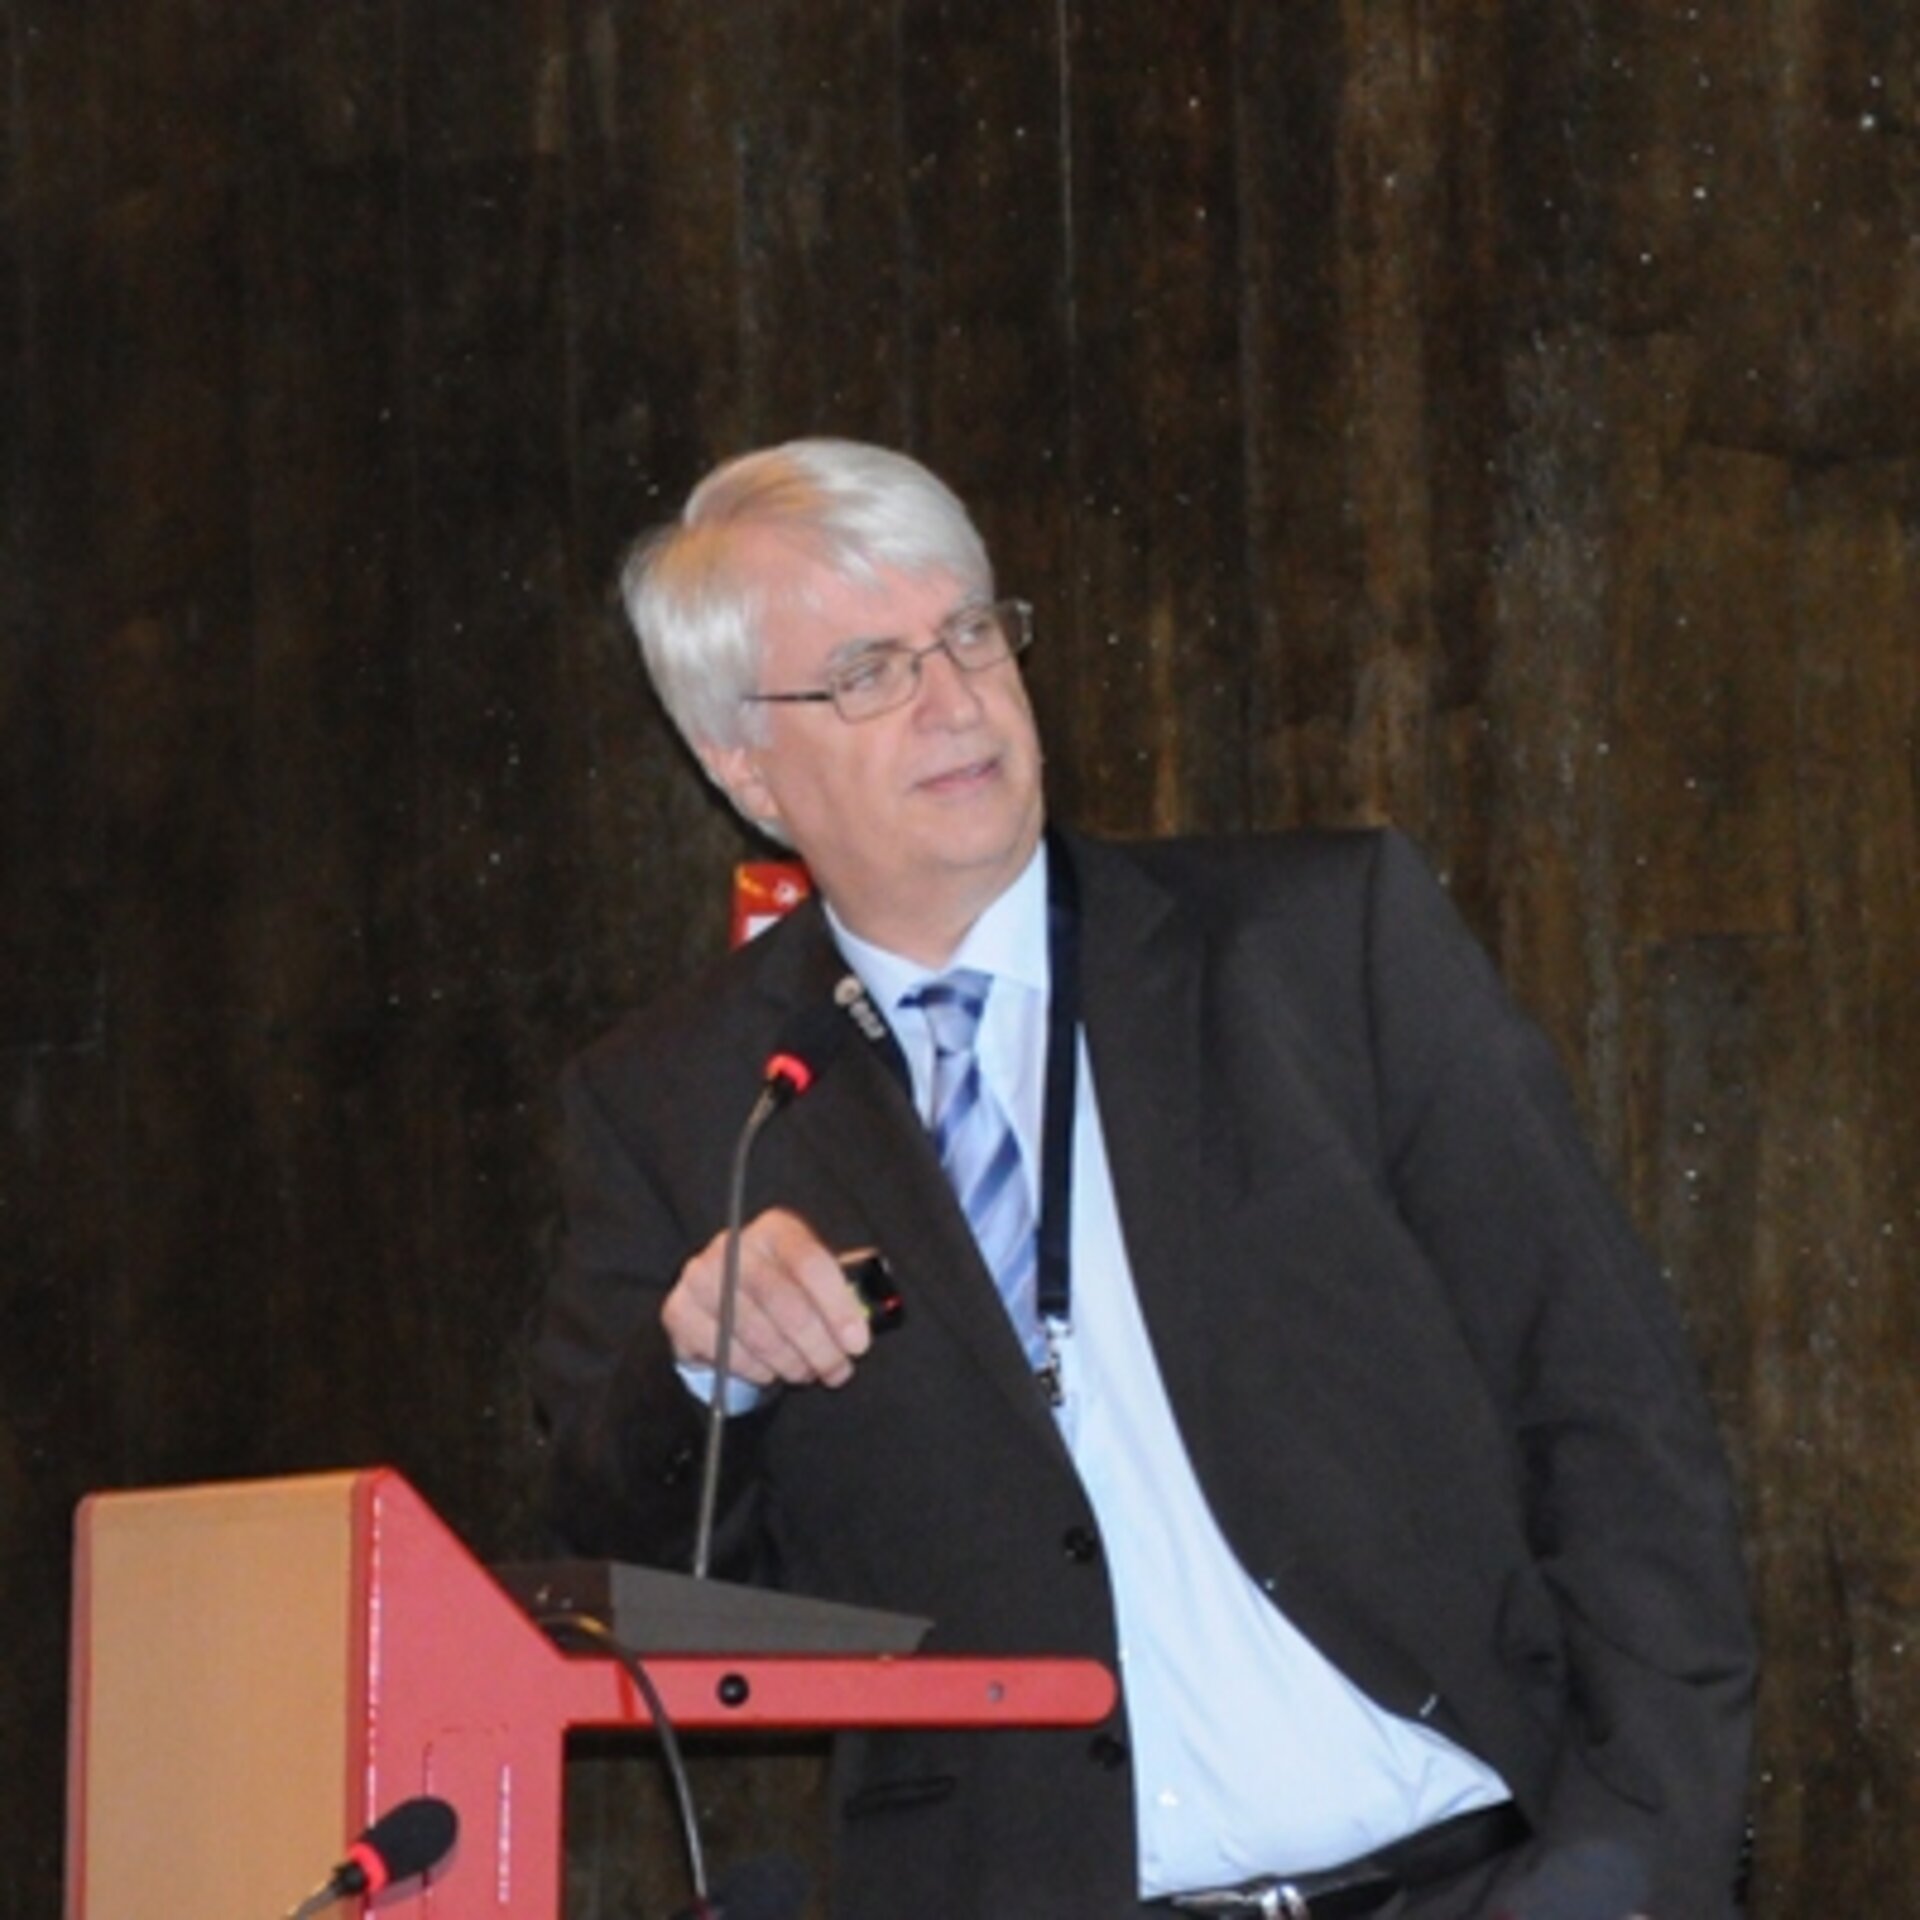 Ingo Gerhard (OHB)  gives his presentation